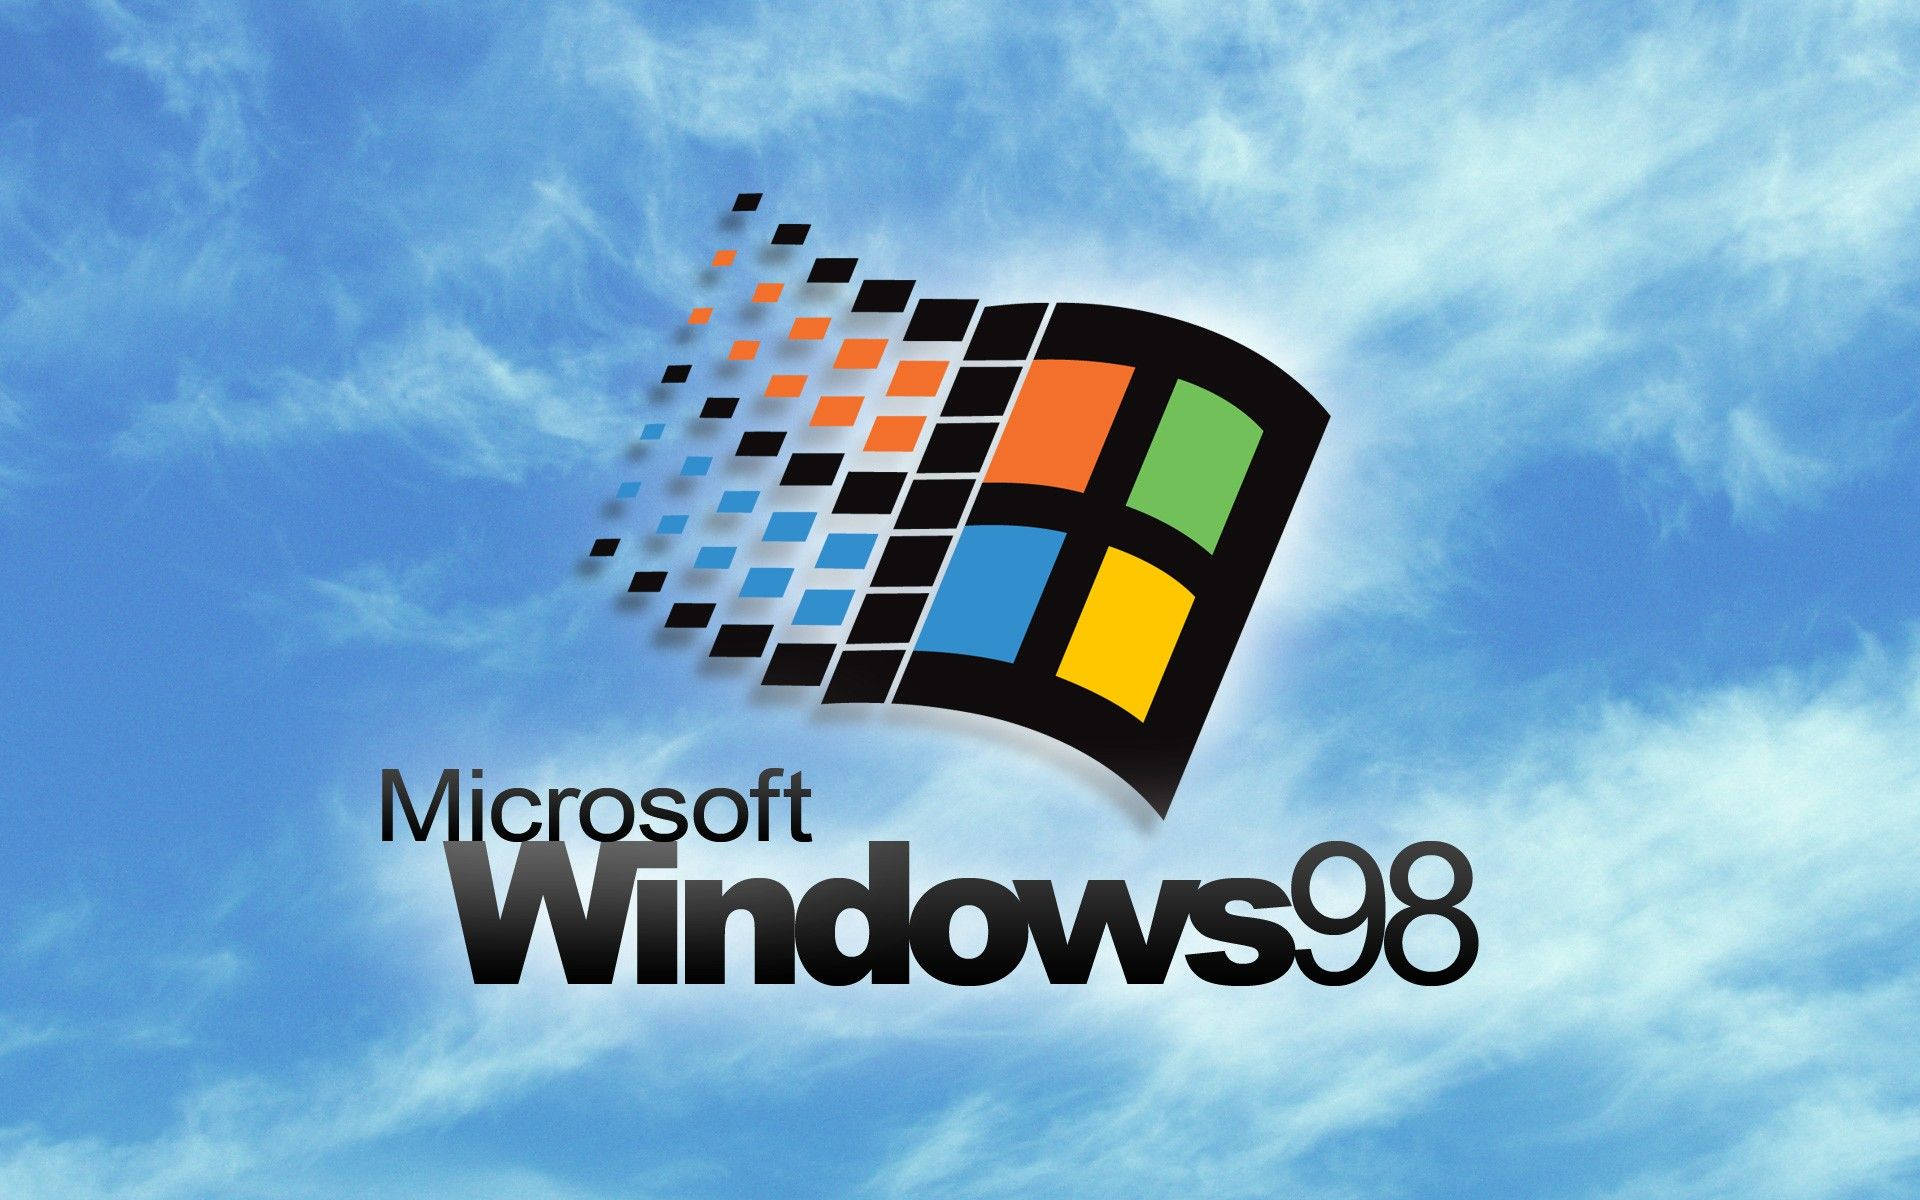 Windows 98 wallpaper - 100% free download for your desktop or ... - Windows 98